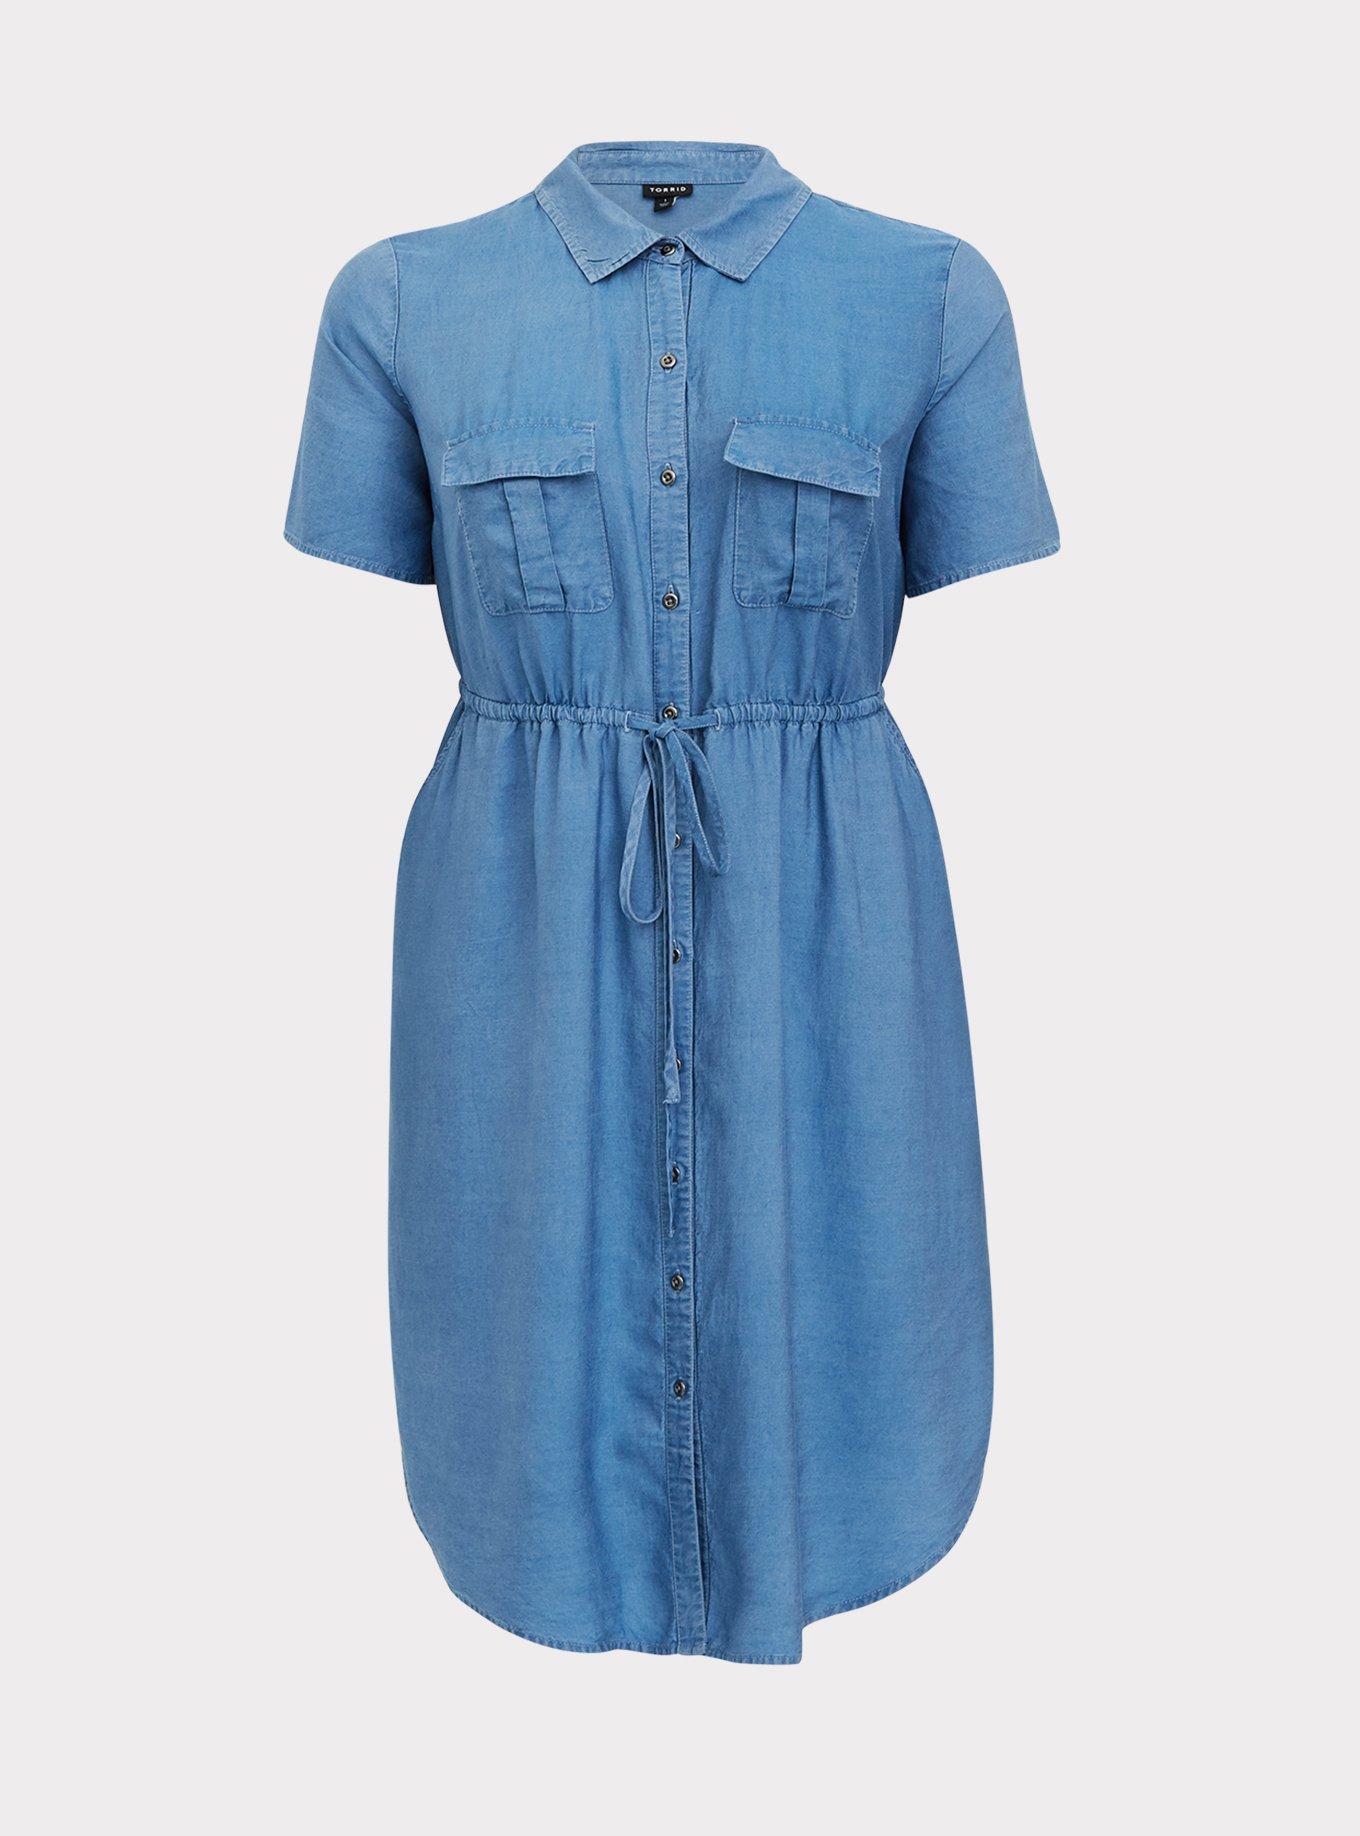 Plus Size - Blue Chambray Button Front Drawstring Shirt Dress - Torrid